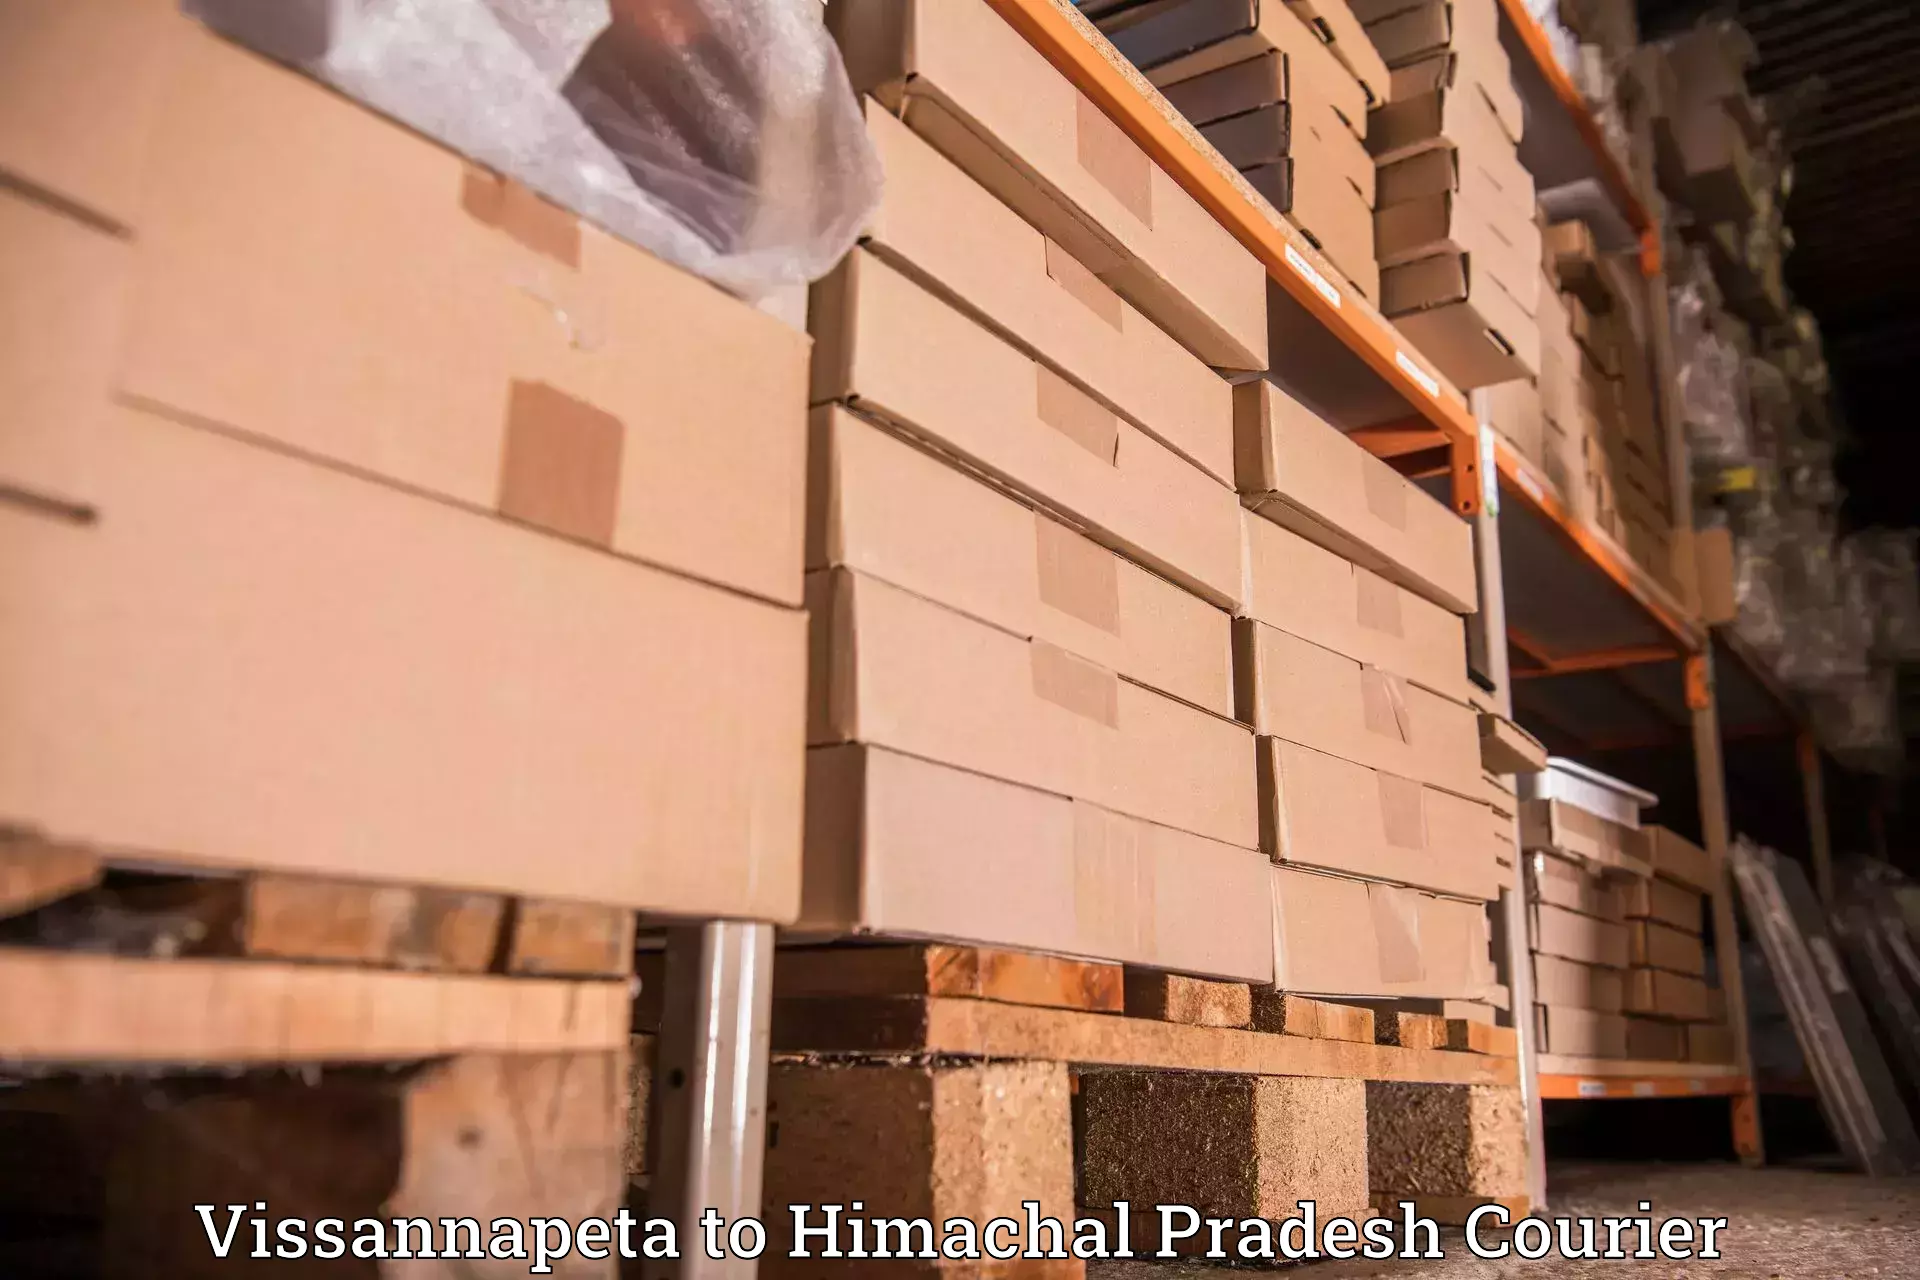 Nationwide parcel services Vissannapeta to Dheera